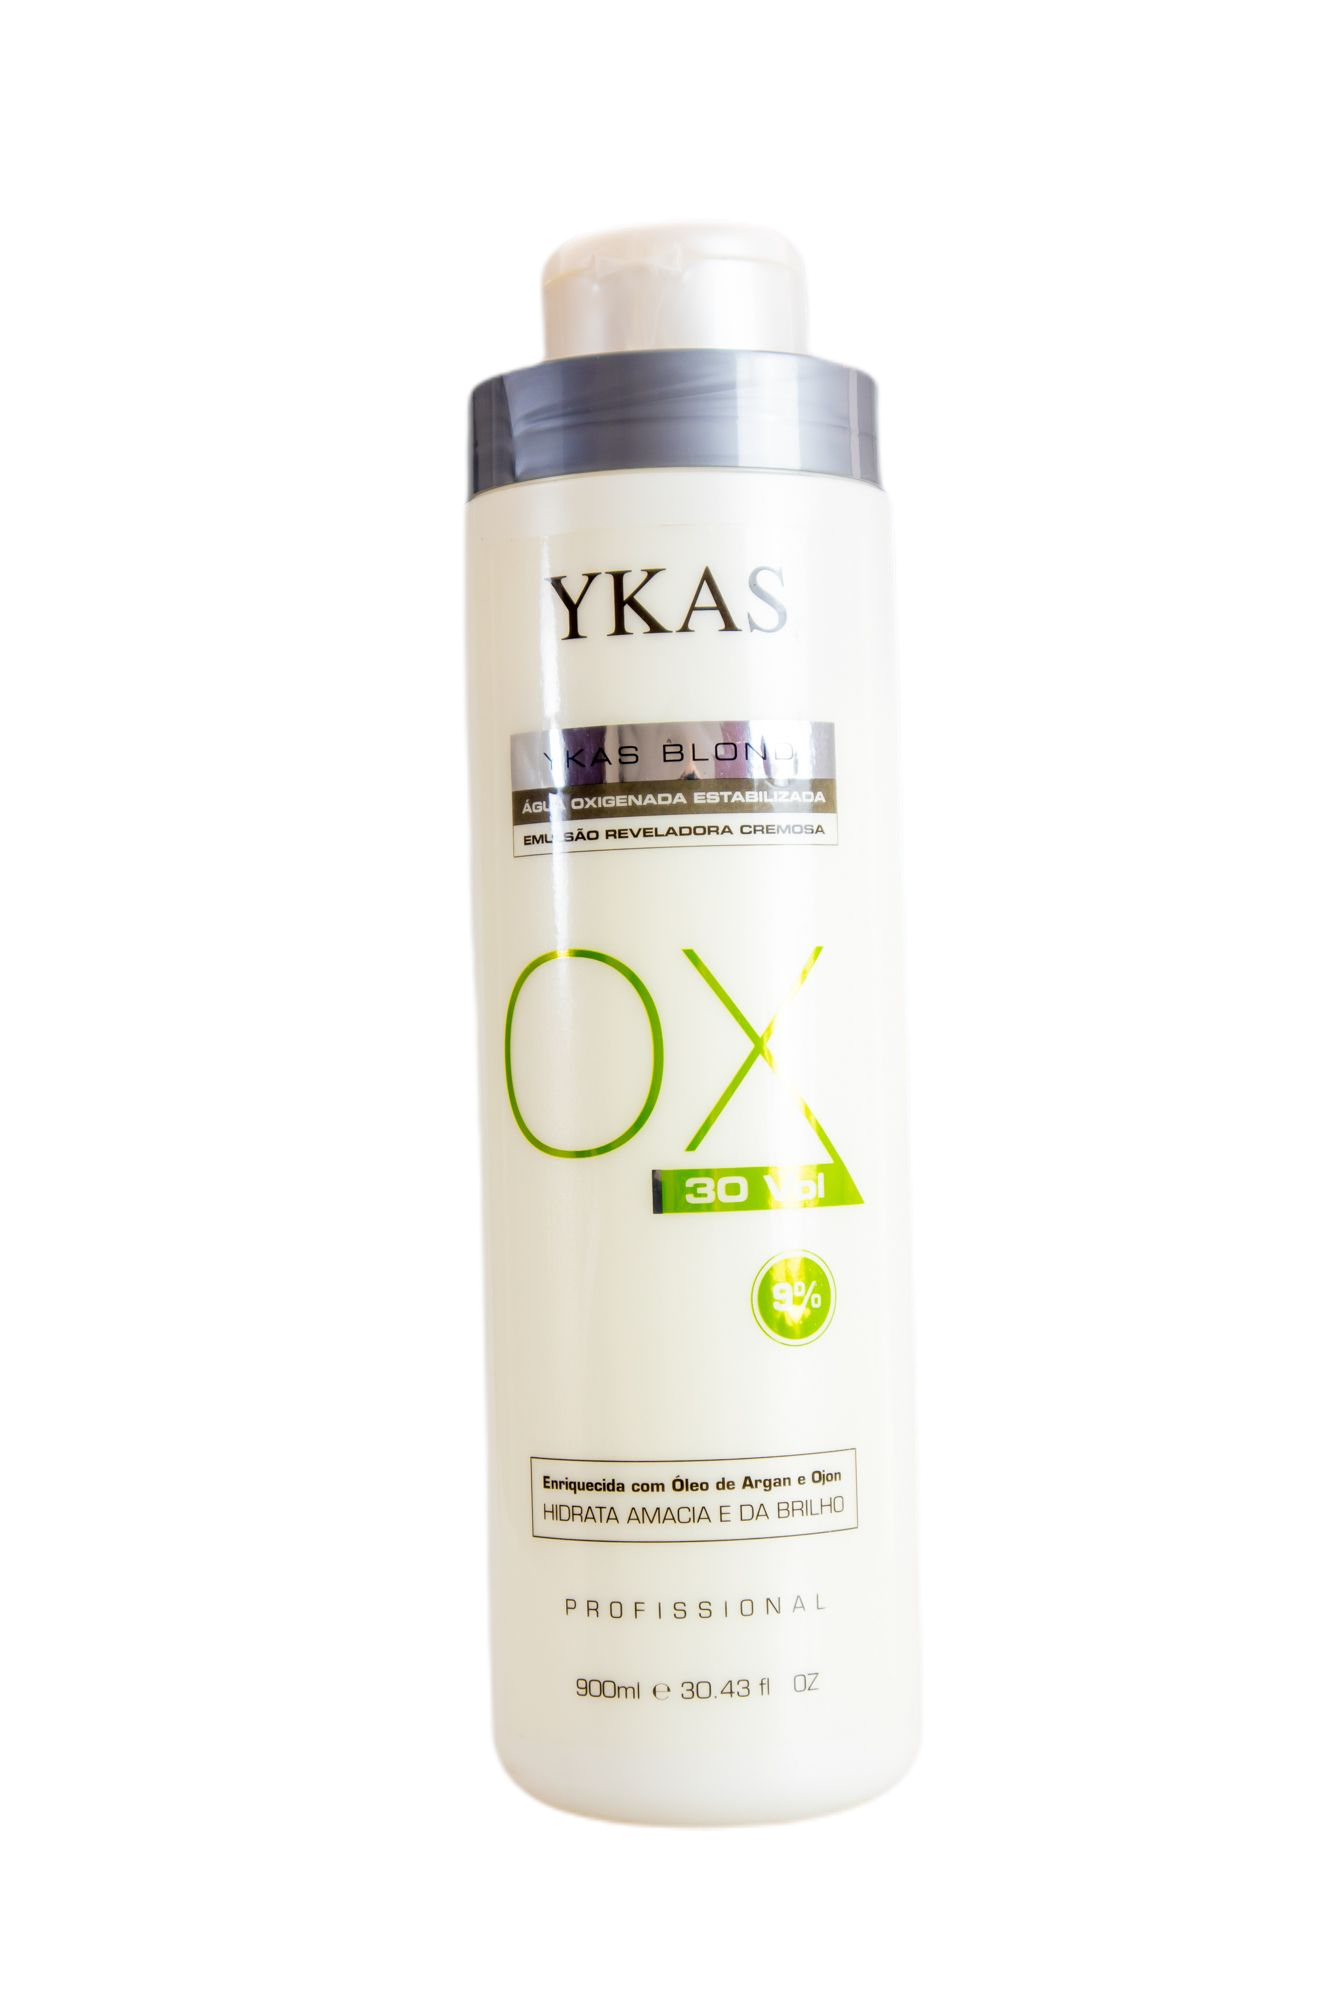 Ykas Brazilian Hair Treatment Professional Blond Oxidizing Emulsion Hair Treatment OX 30 9% 900ml - Ykas